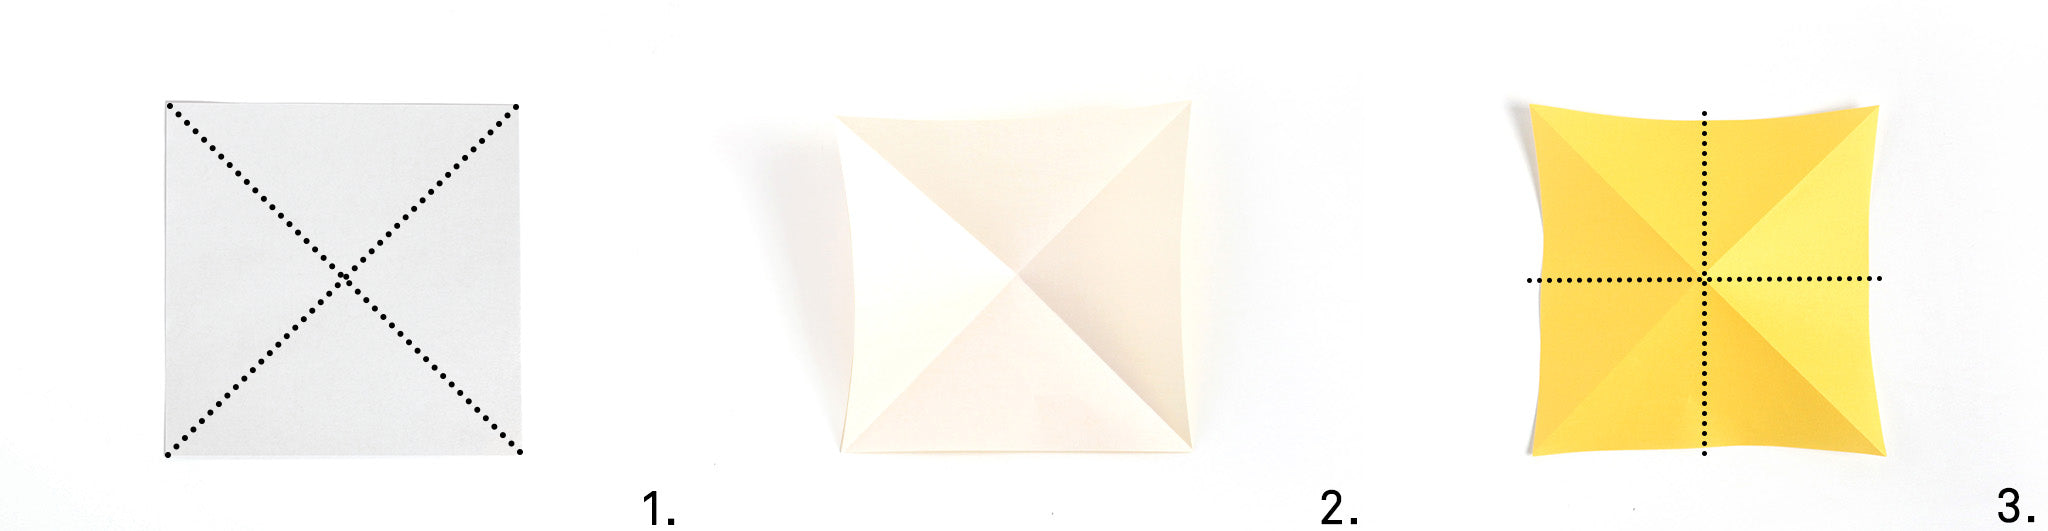 blog-tuto-guirlande-lumineuse-origami-etapes-1-3